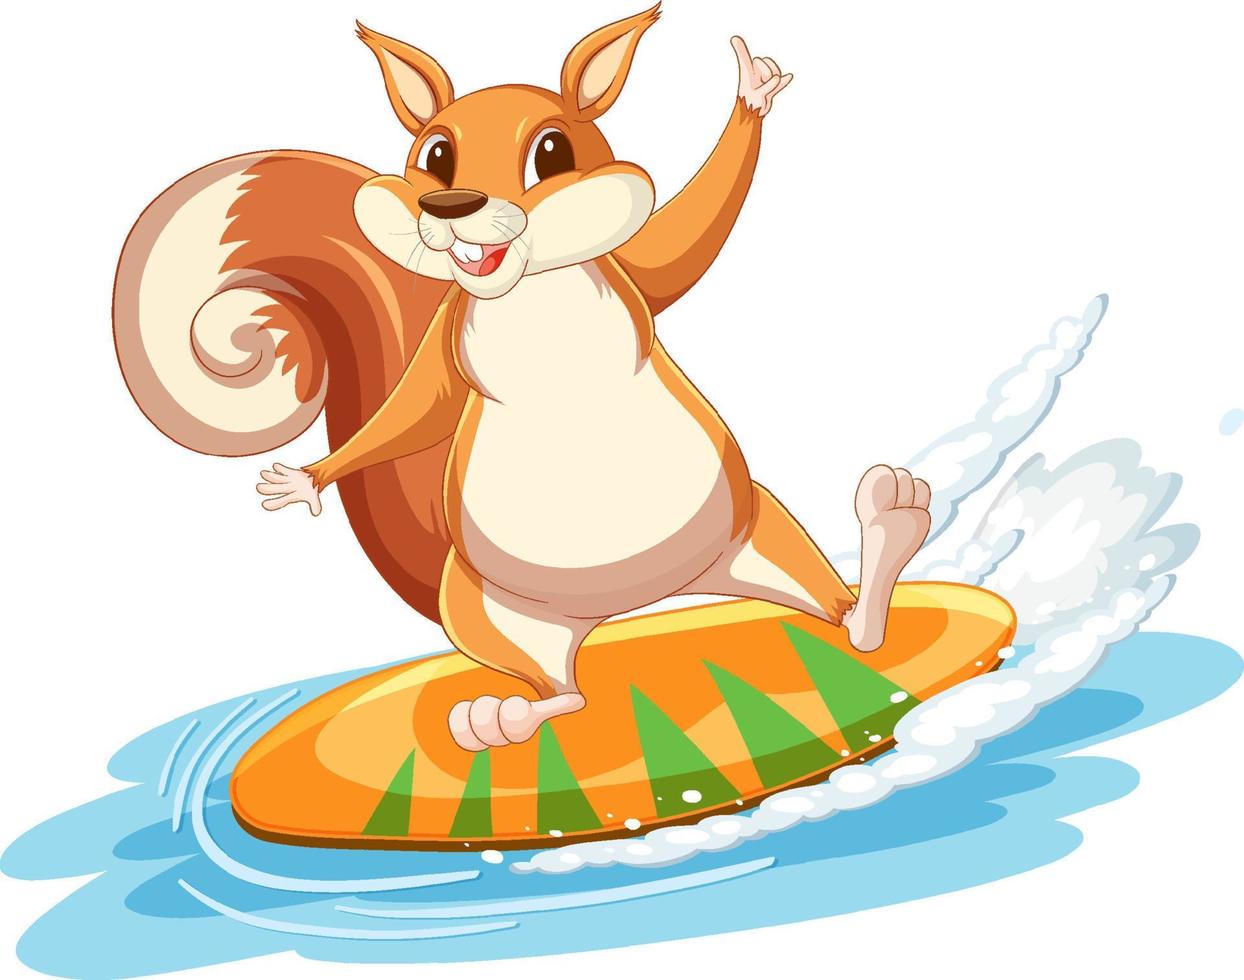 Squirrel standing on surfboard vector